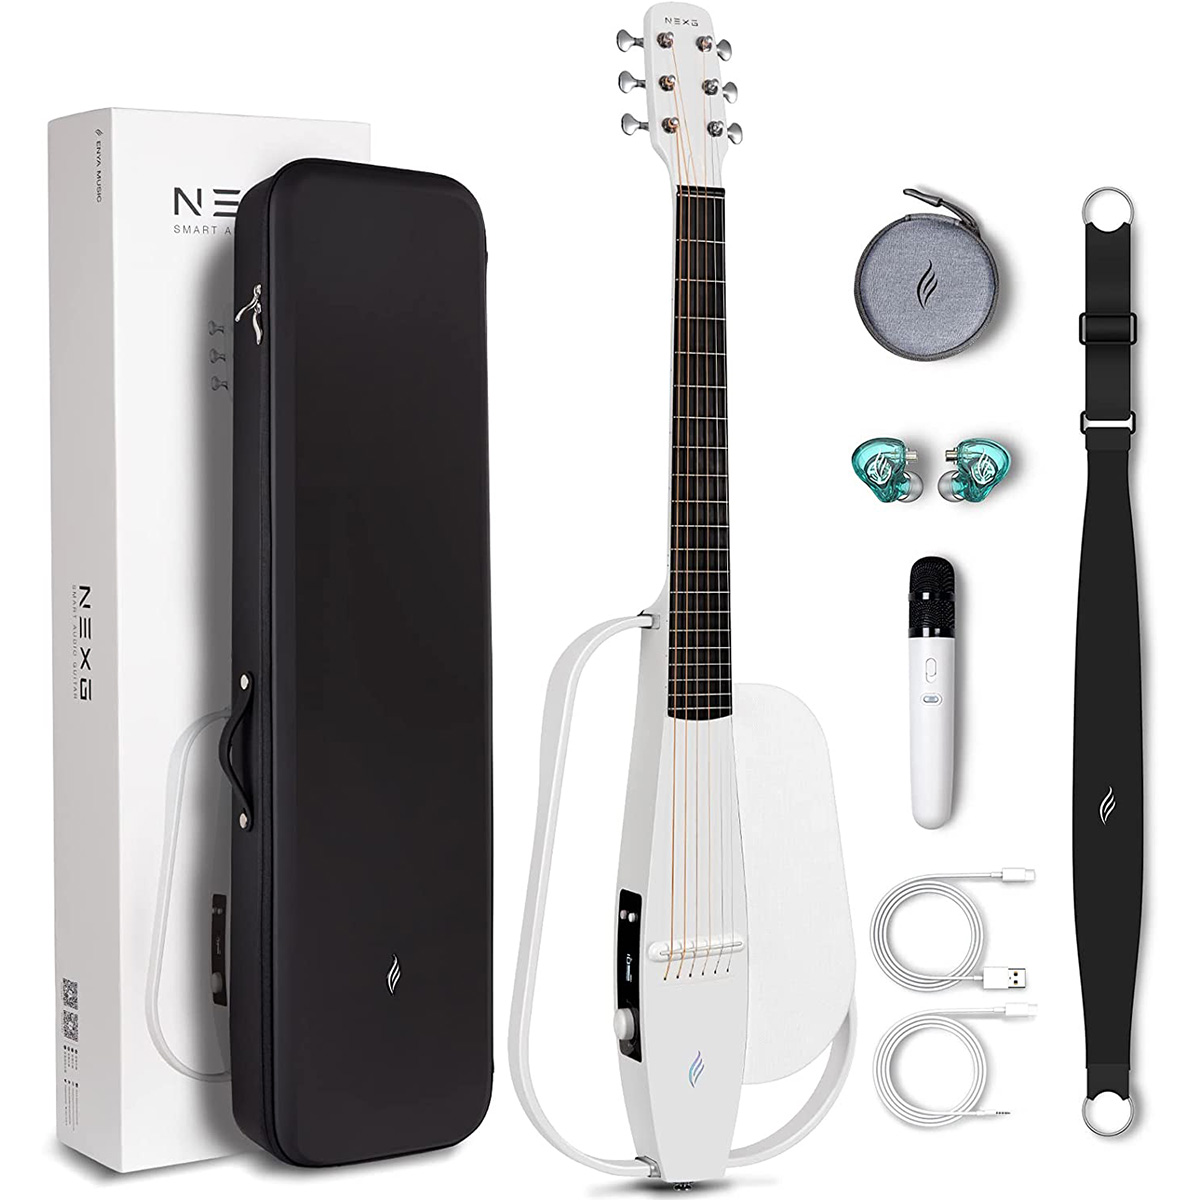 Enya NEXG white ホワイト アコースティックギター充電スタンド付属-